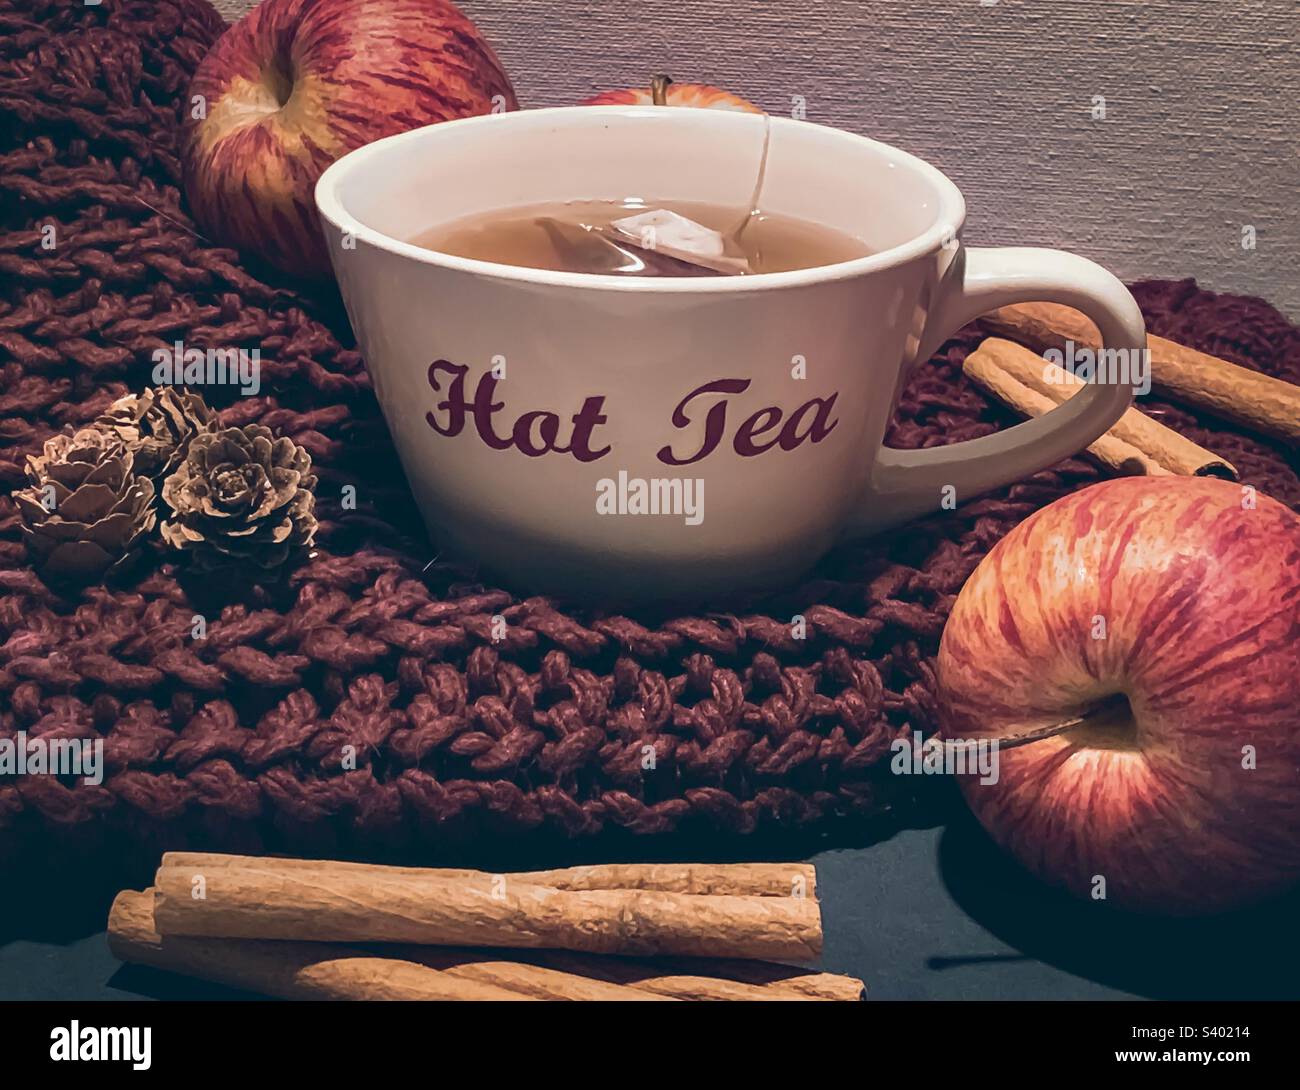 Apple & Cinnamon tea, shown with fruit & spice on knitwear Stock Photo